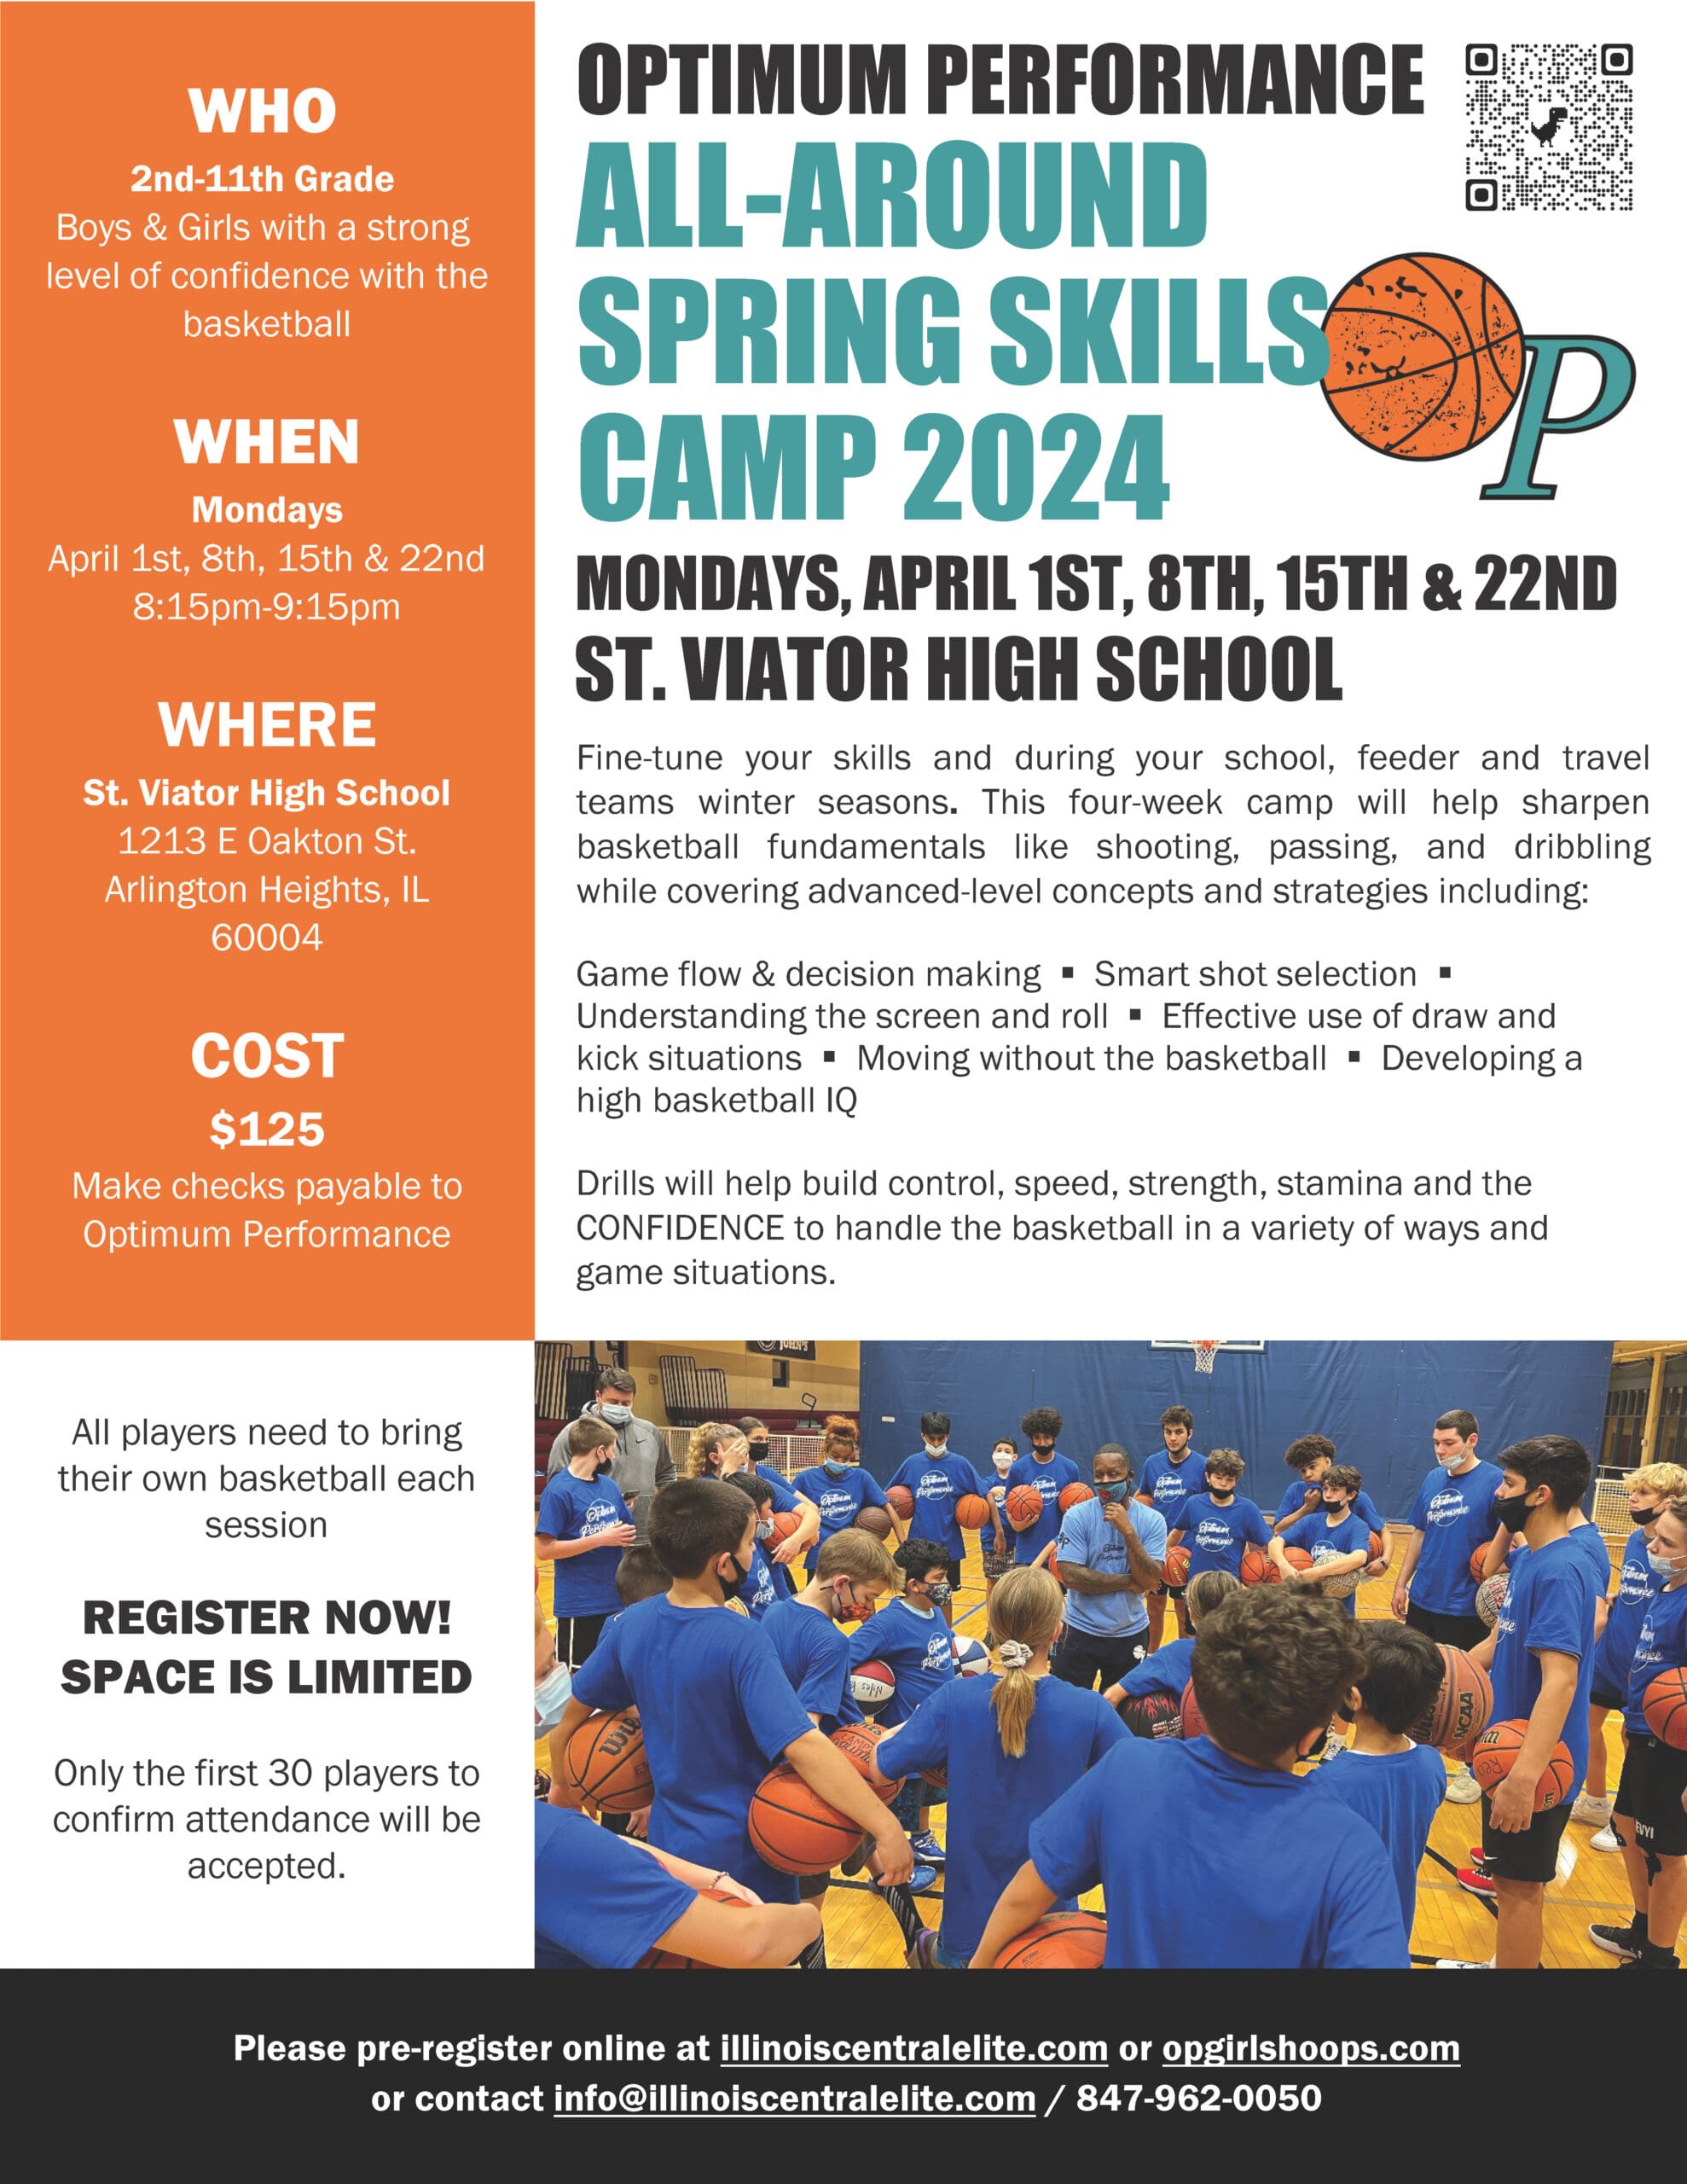 OP All-Around Spring Skills Camp 2024